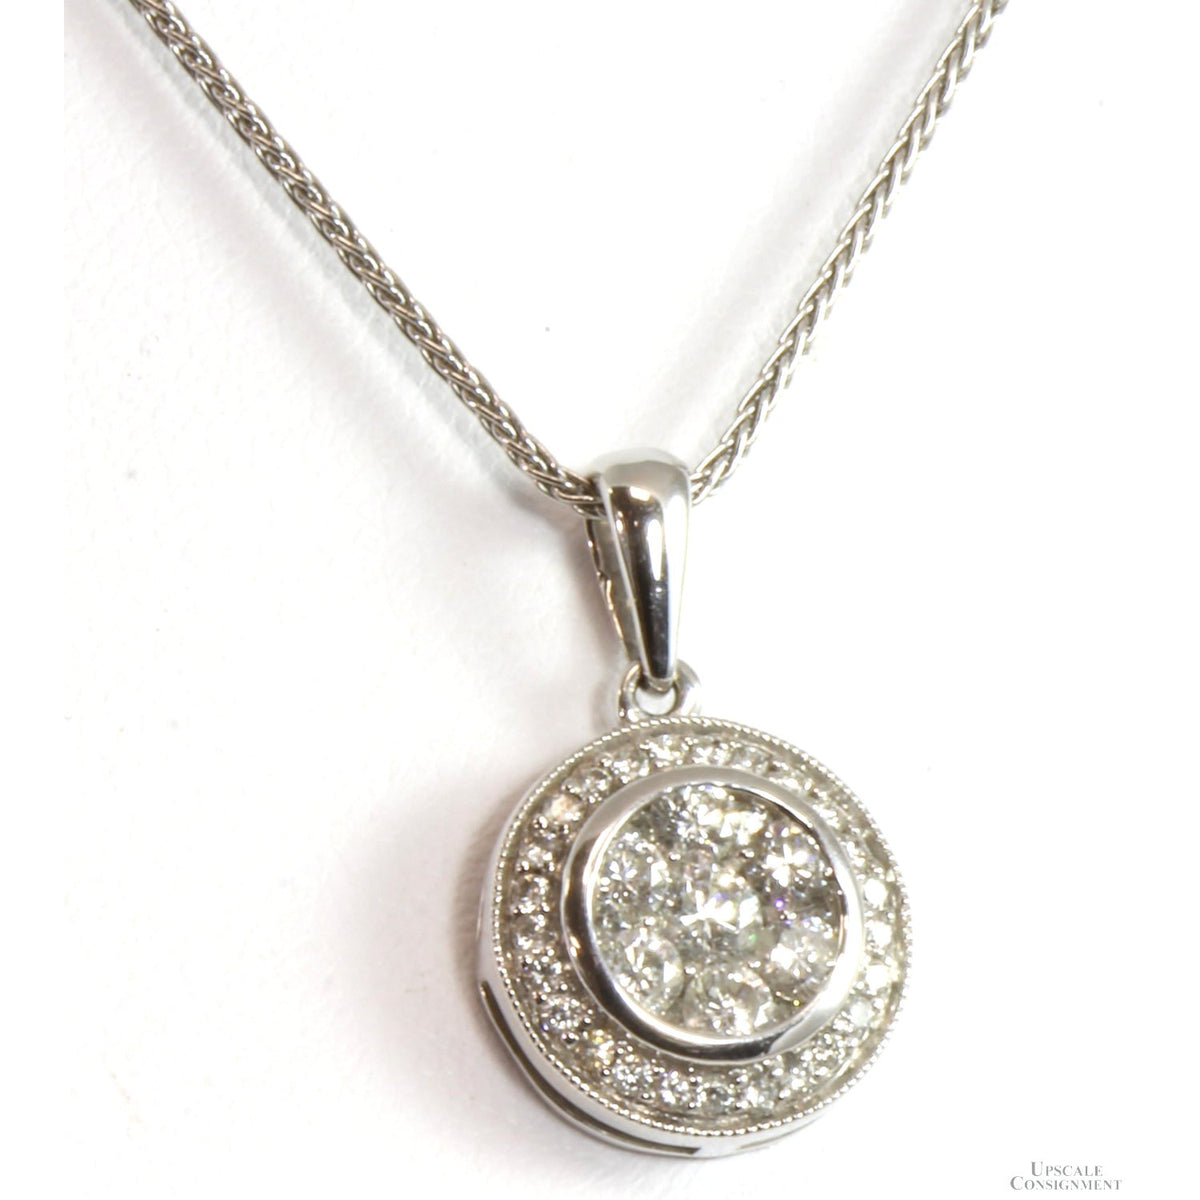 1.00ctw Diamond 14K White Gold Circular Pendant Necklace